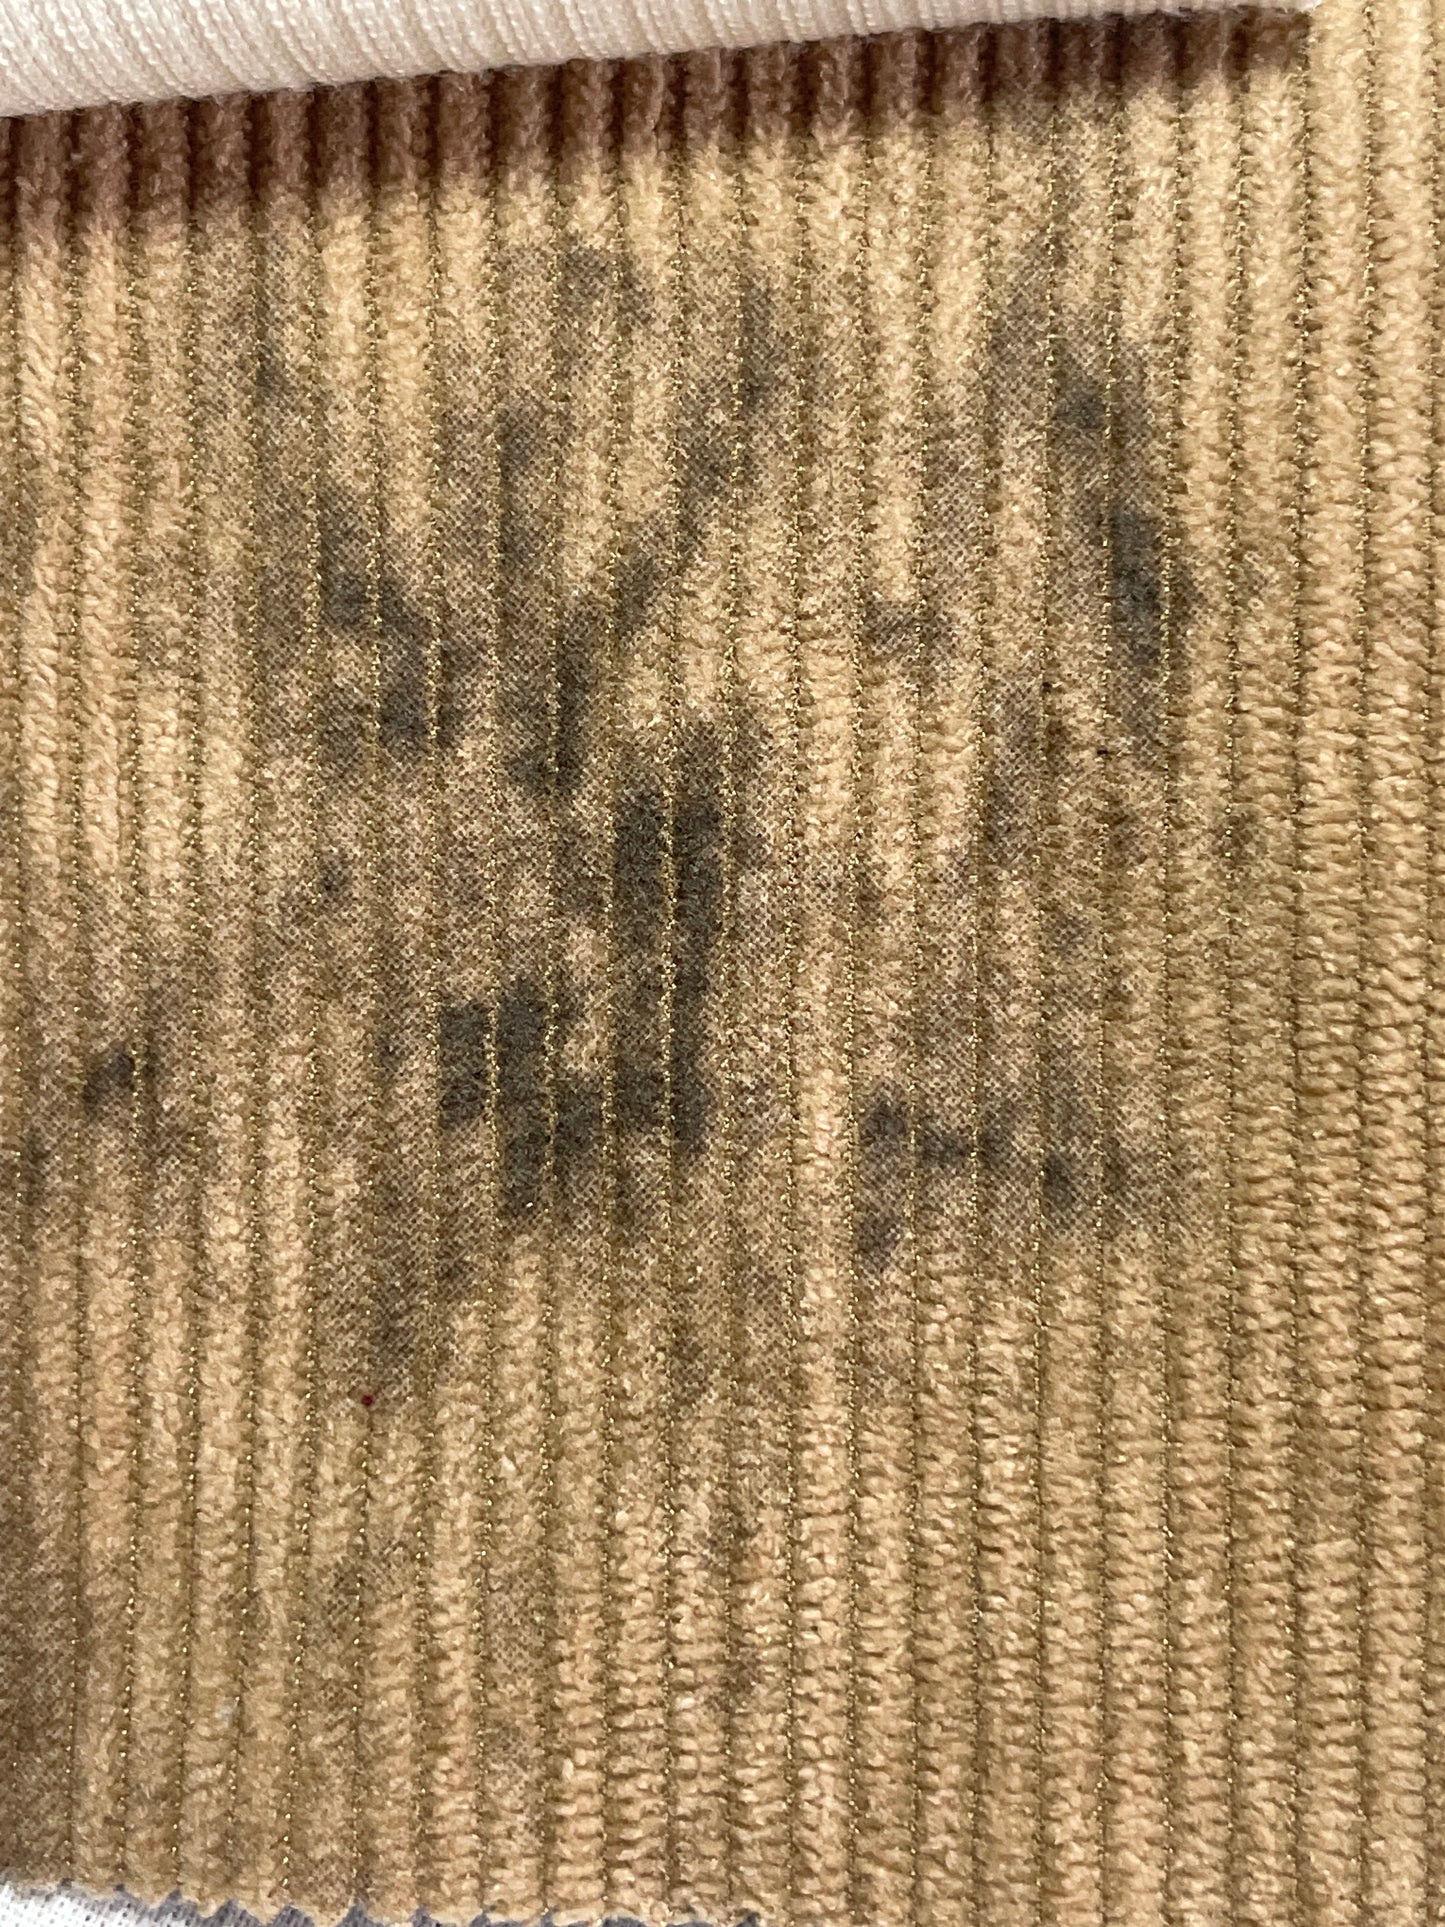 100% Polyester  Woven Corduroy Fabric--Tied Dyed Print - Natasha Fabric